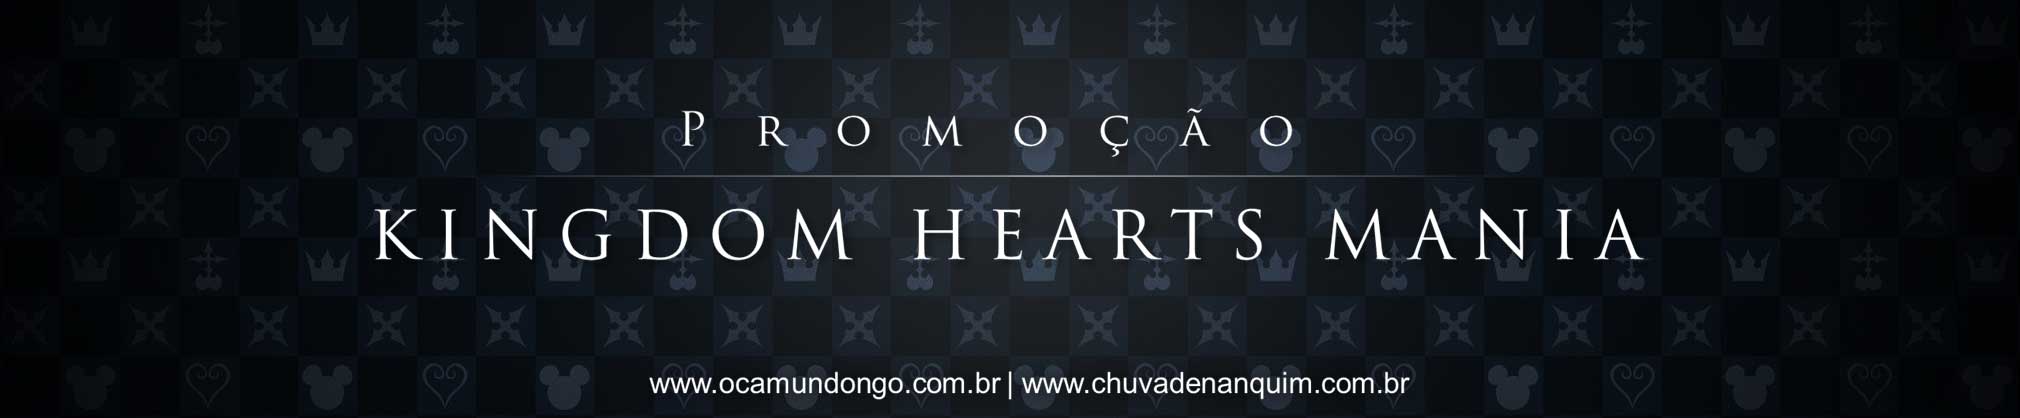 final-promocao-kingdom-hearts-mania